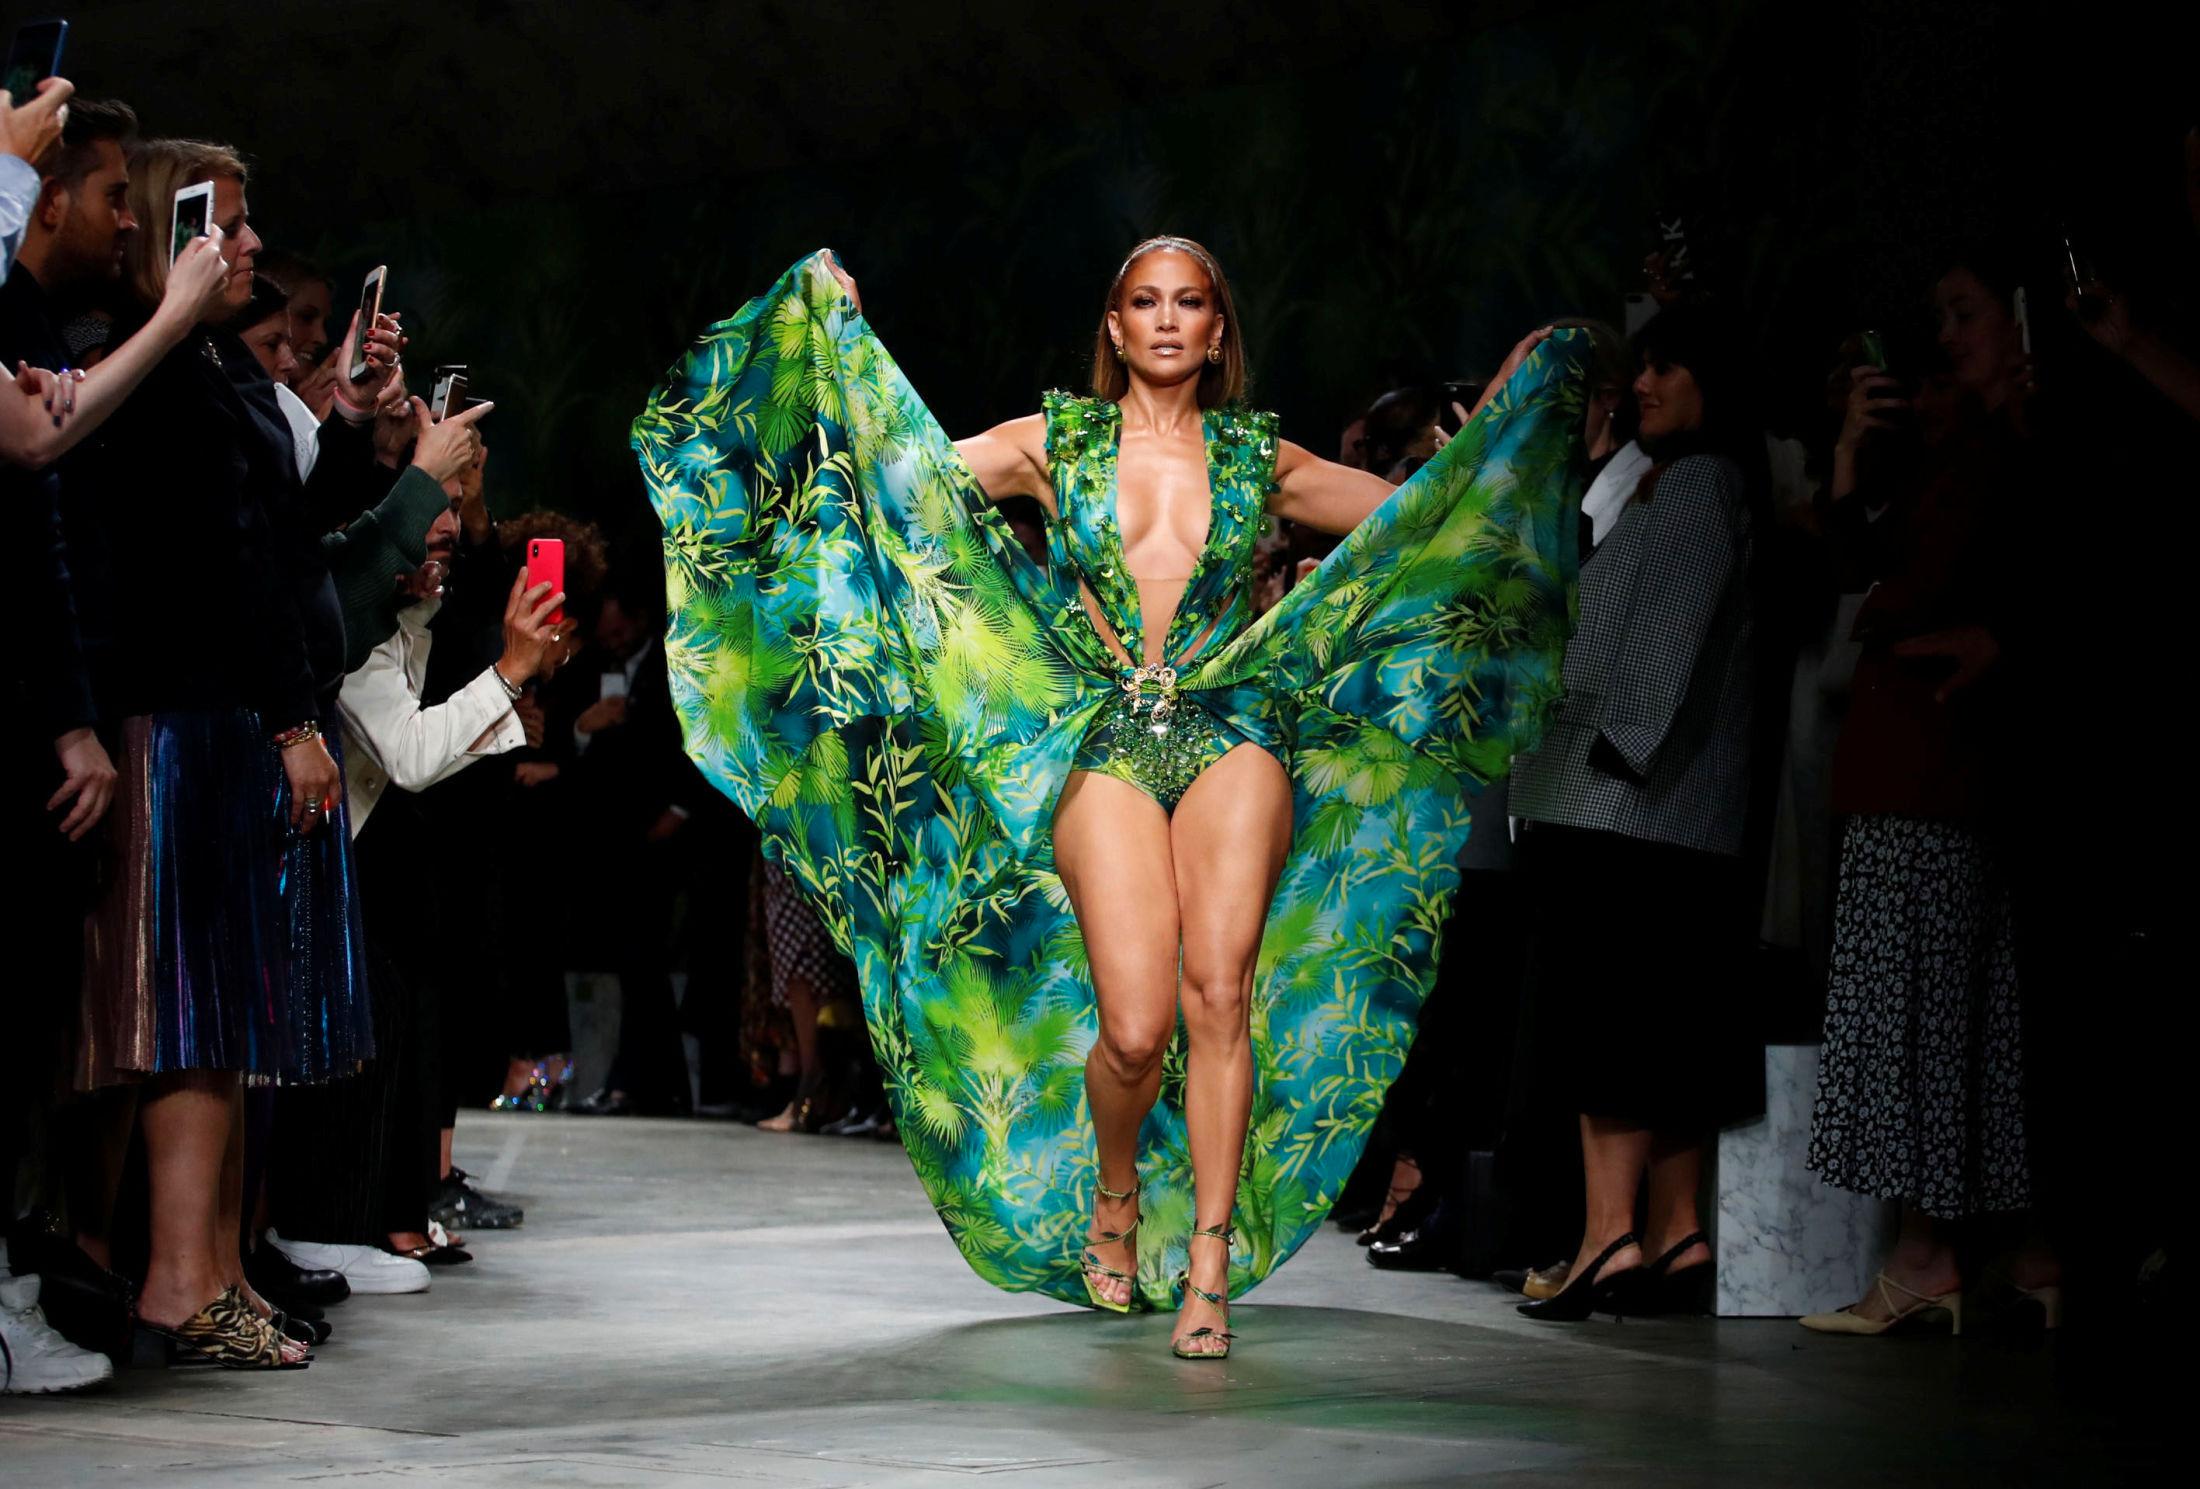 OVERRASKET: Jennifer Lopez gjorde comeback i sin ikoniske jungelkjole under Versaces moteshow i Milano. Foto: Alessandro Garofalo/Reuters.